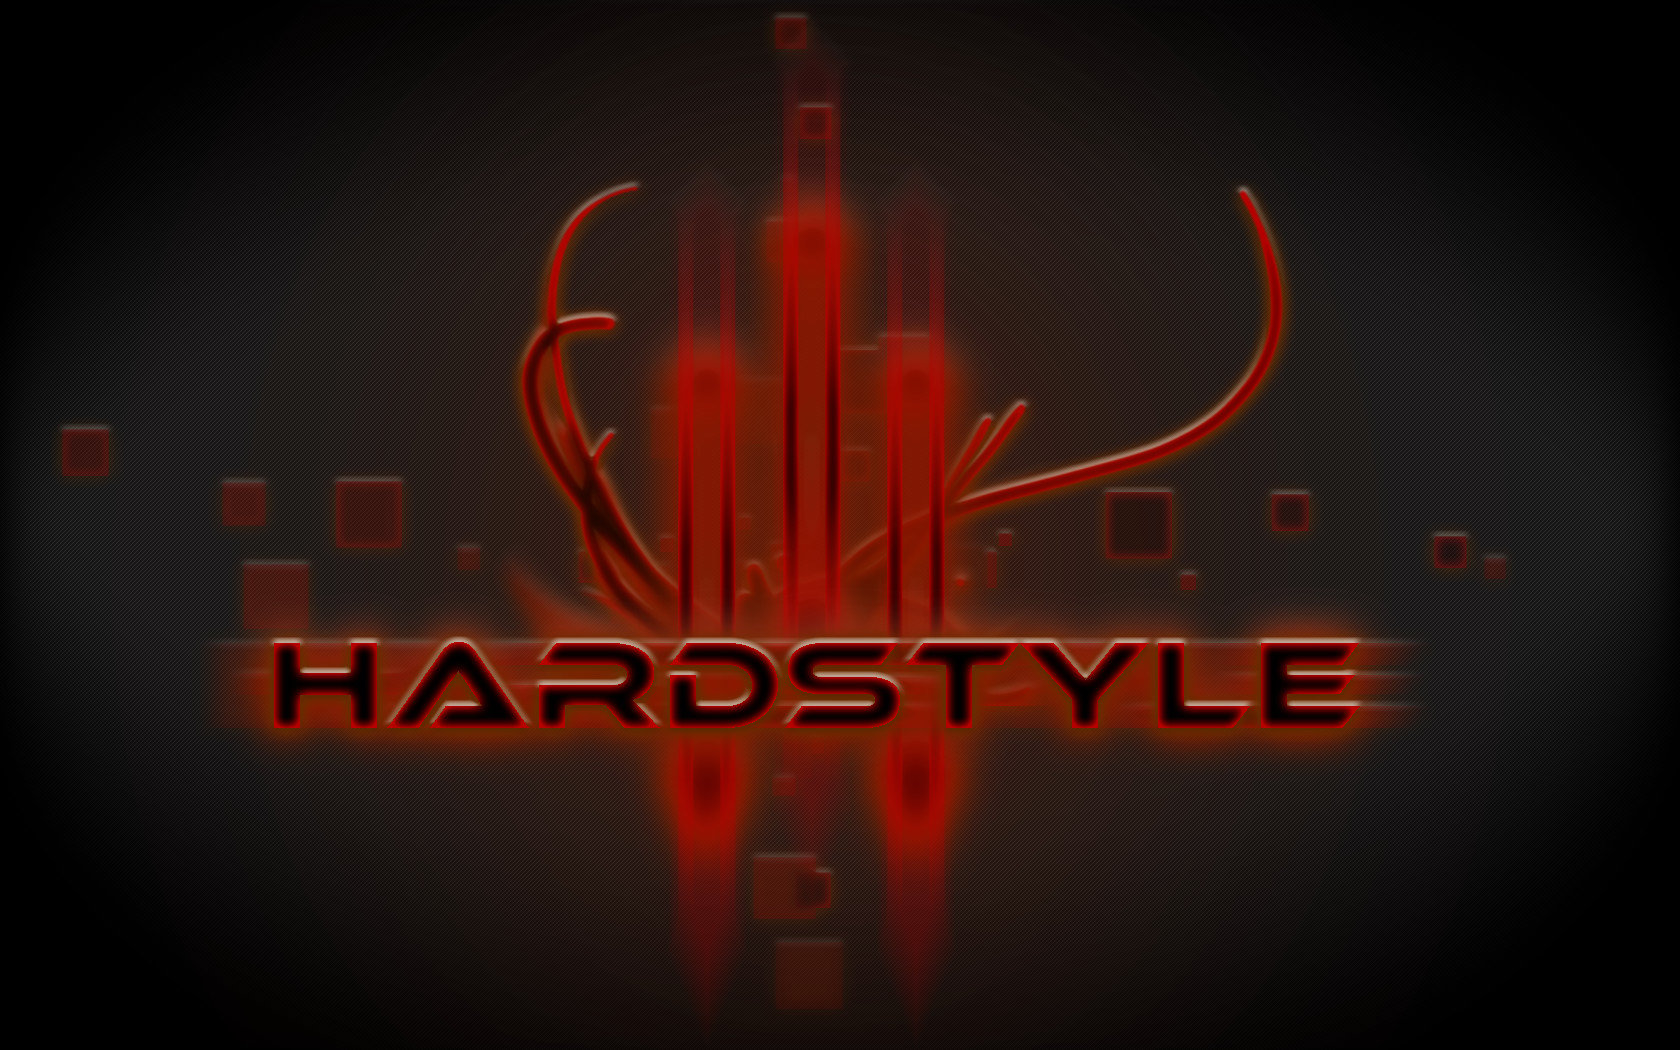 Free Download Hardstyle Wallpaper Id - Darkness - HD Wallpaper 